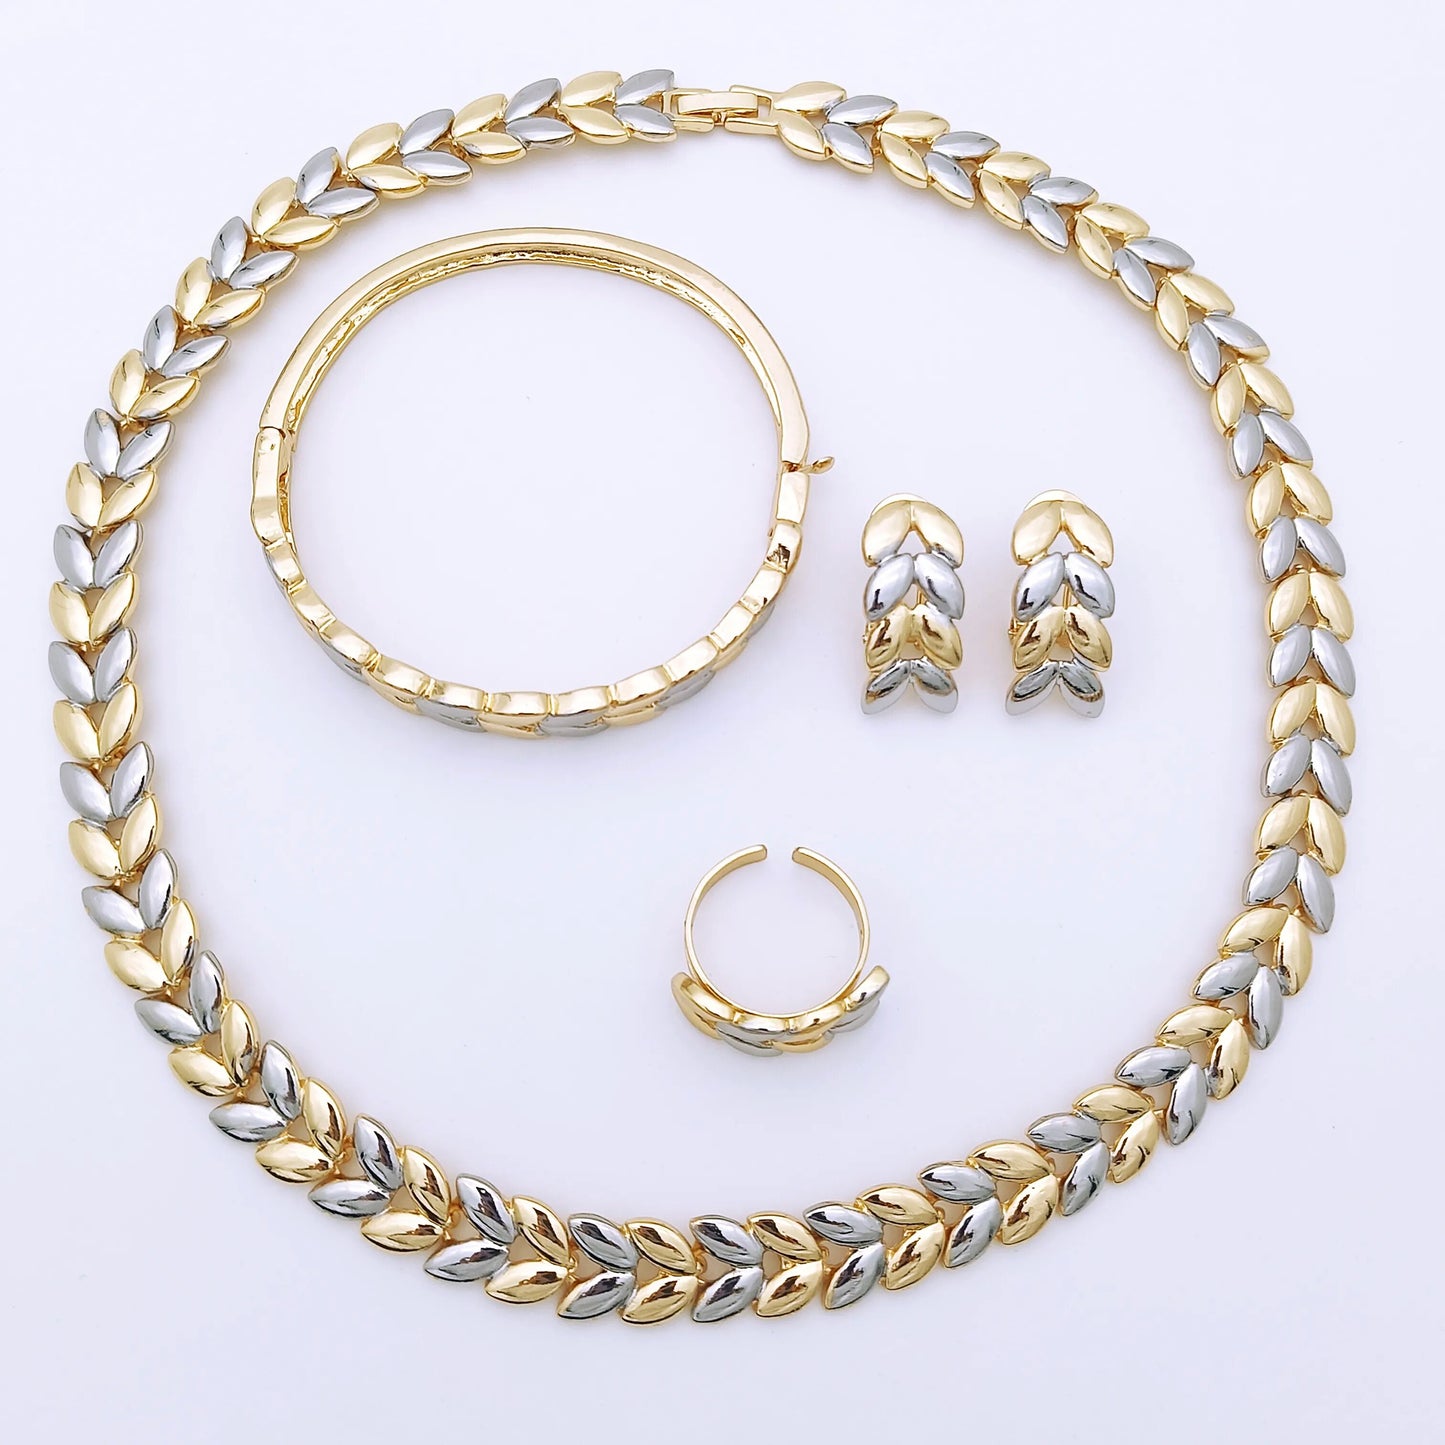 Italian Brazilian Jewelry Set Wedding Jewellery 18k Gold Plated Necklace For Women Daily Wear Fashion Bride Accessories Gifts - TaMNz